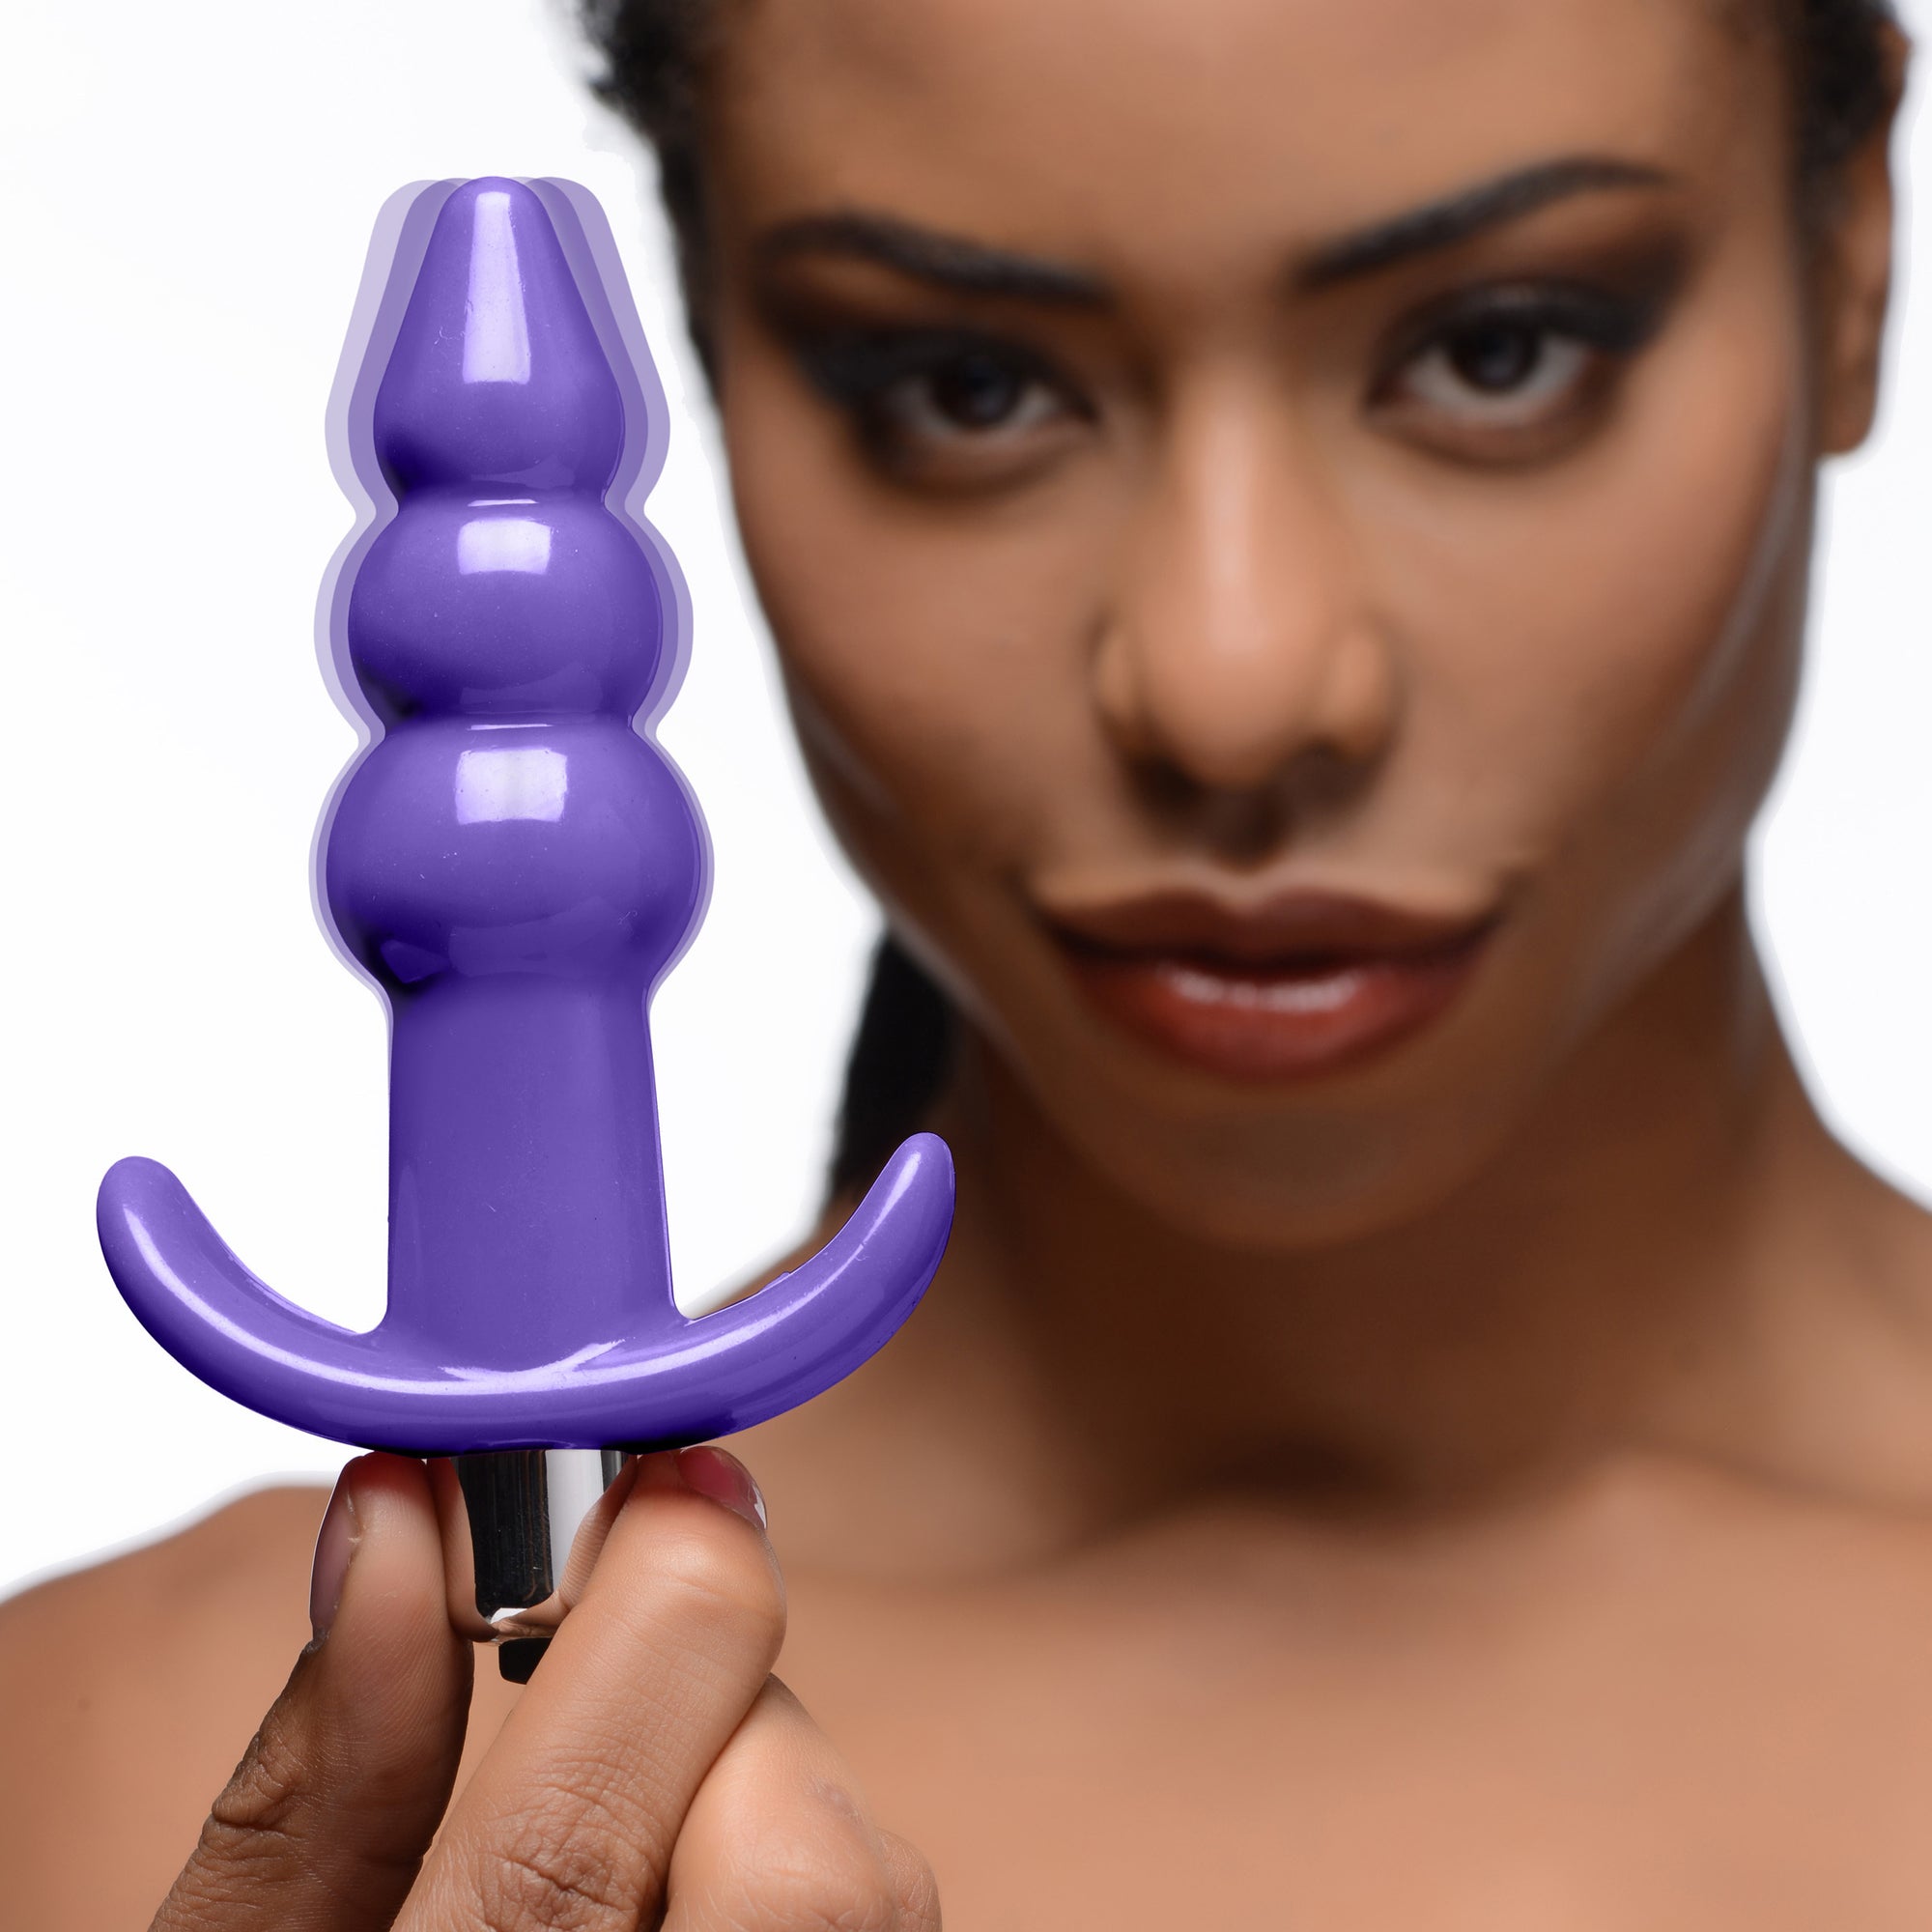 Ribbed Vibrating Butt Plug - Purple 
Anal Toys
Frisky Cupid’s Secret Stash